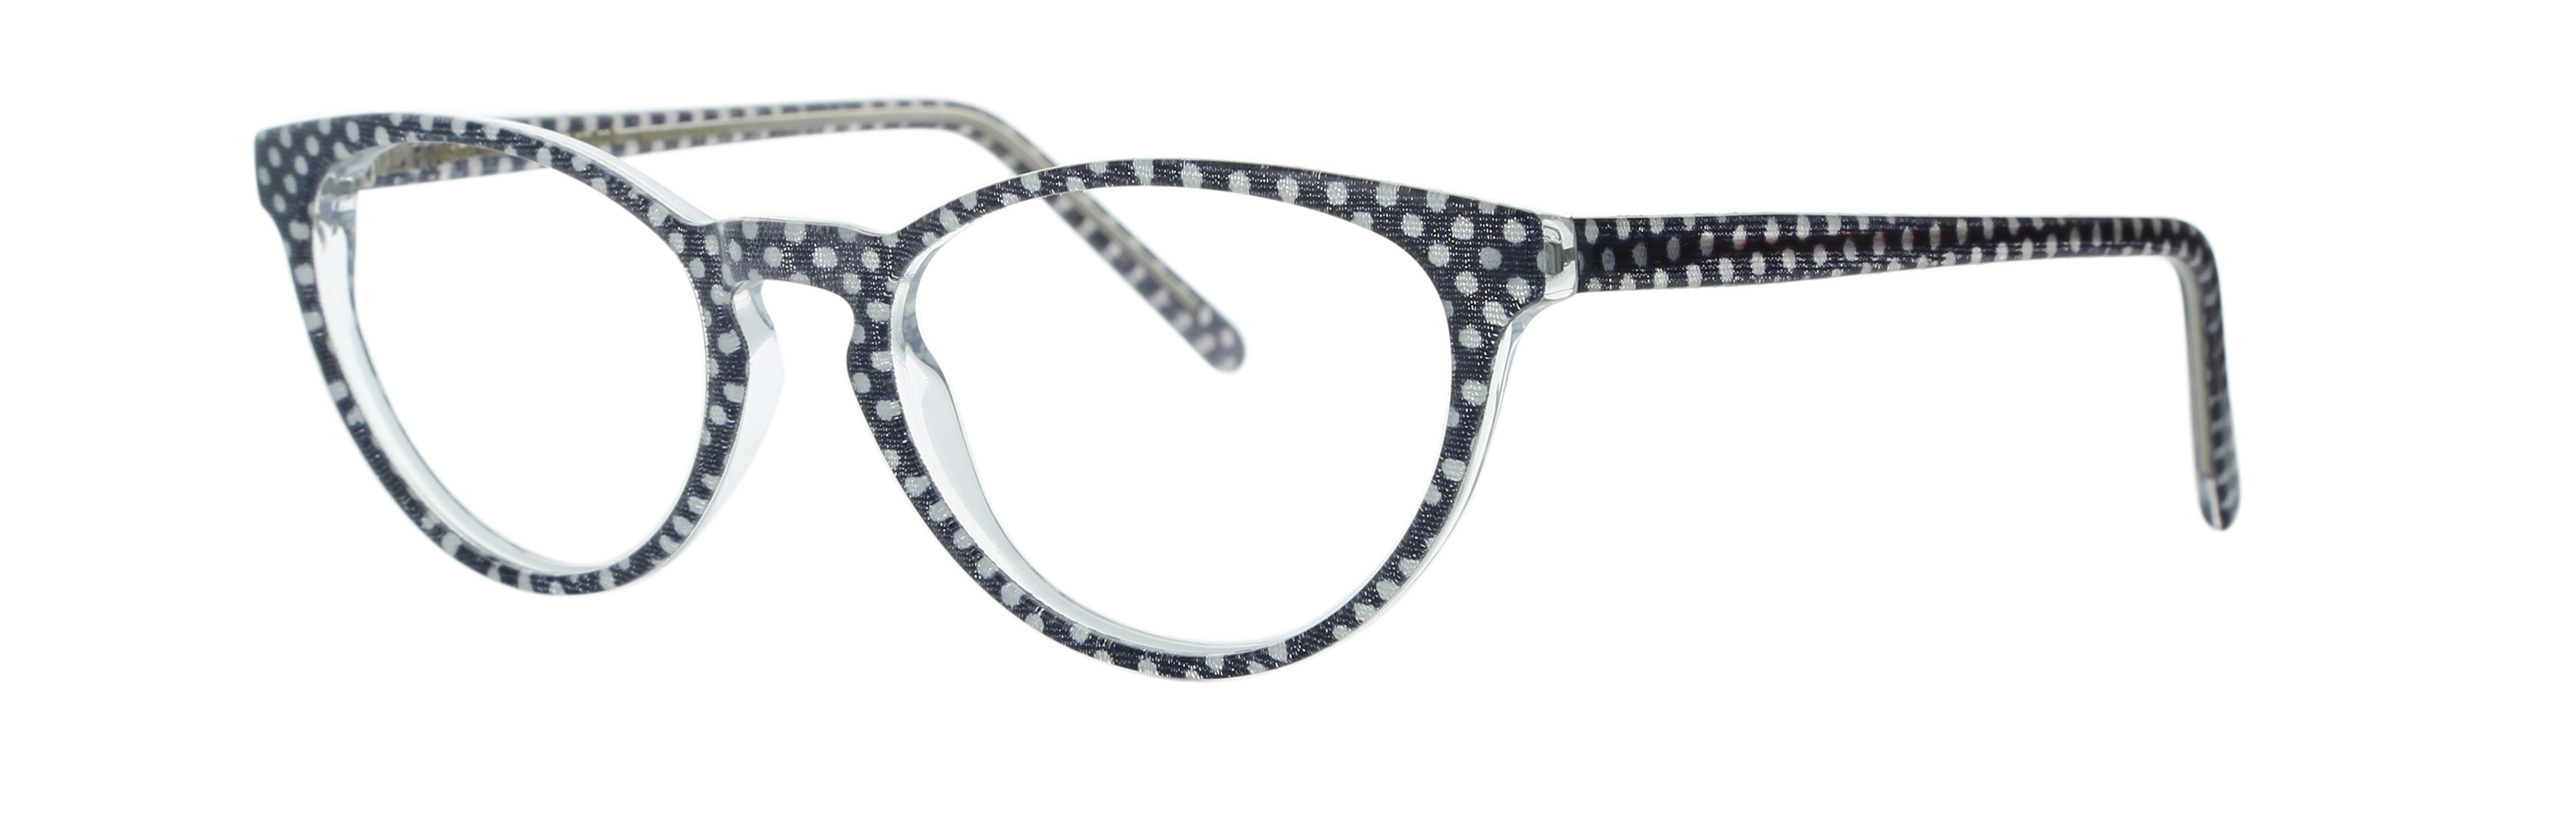 Simone by LaFont Eyewear and Eyeglasses